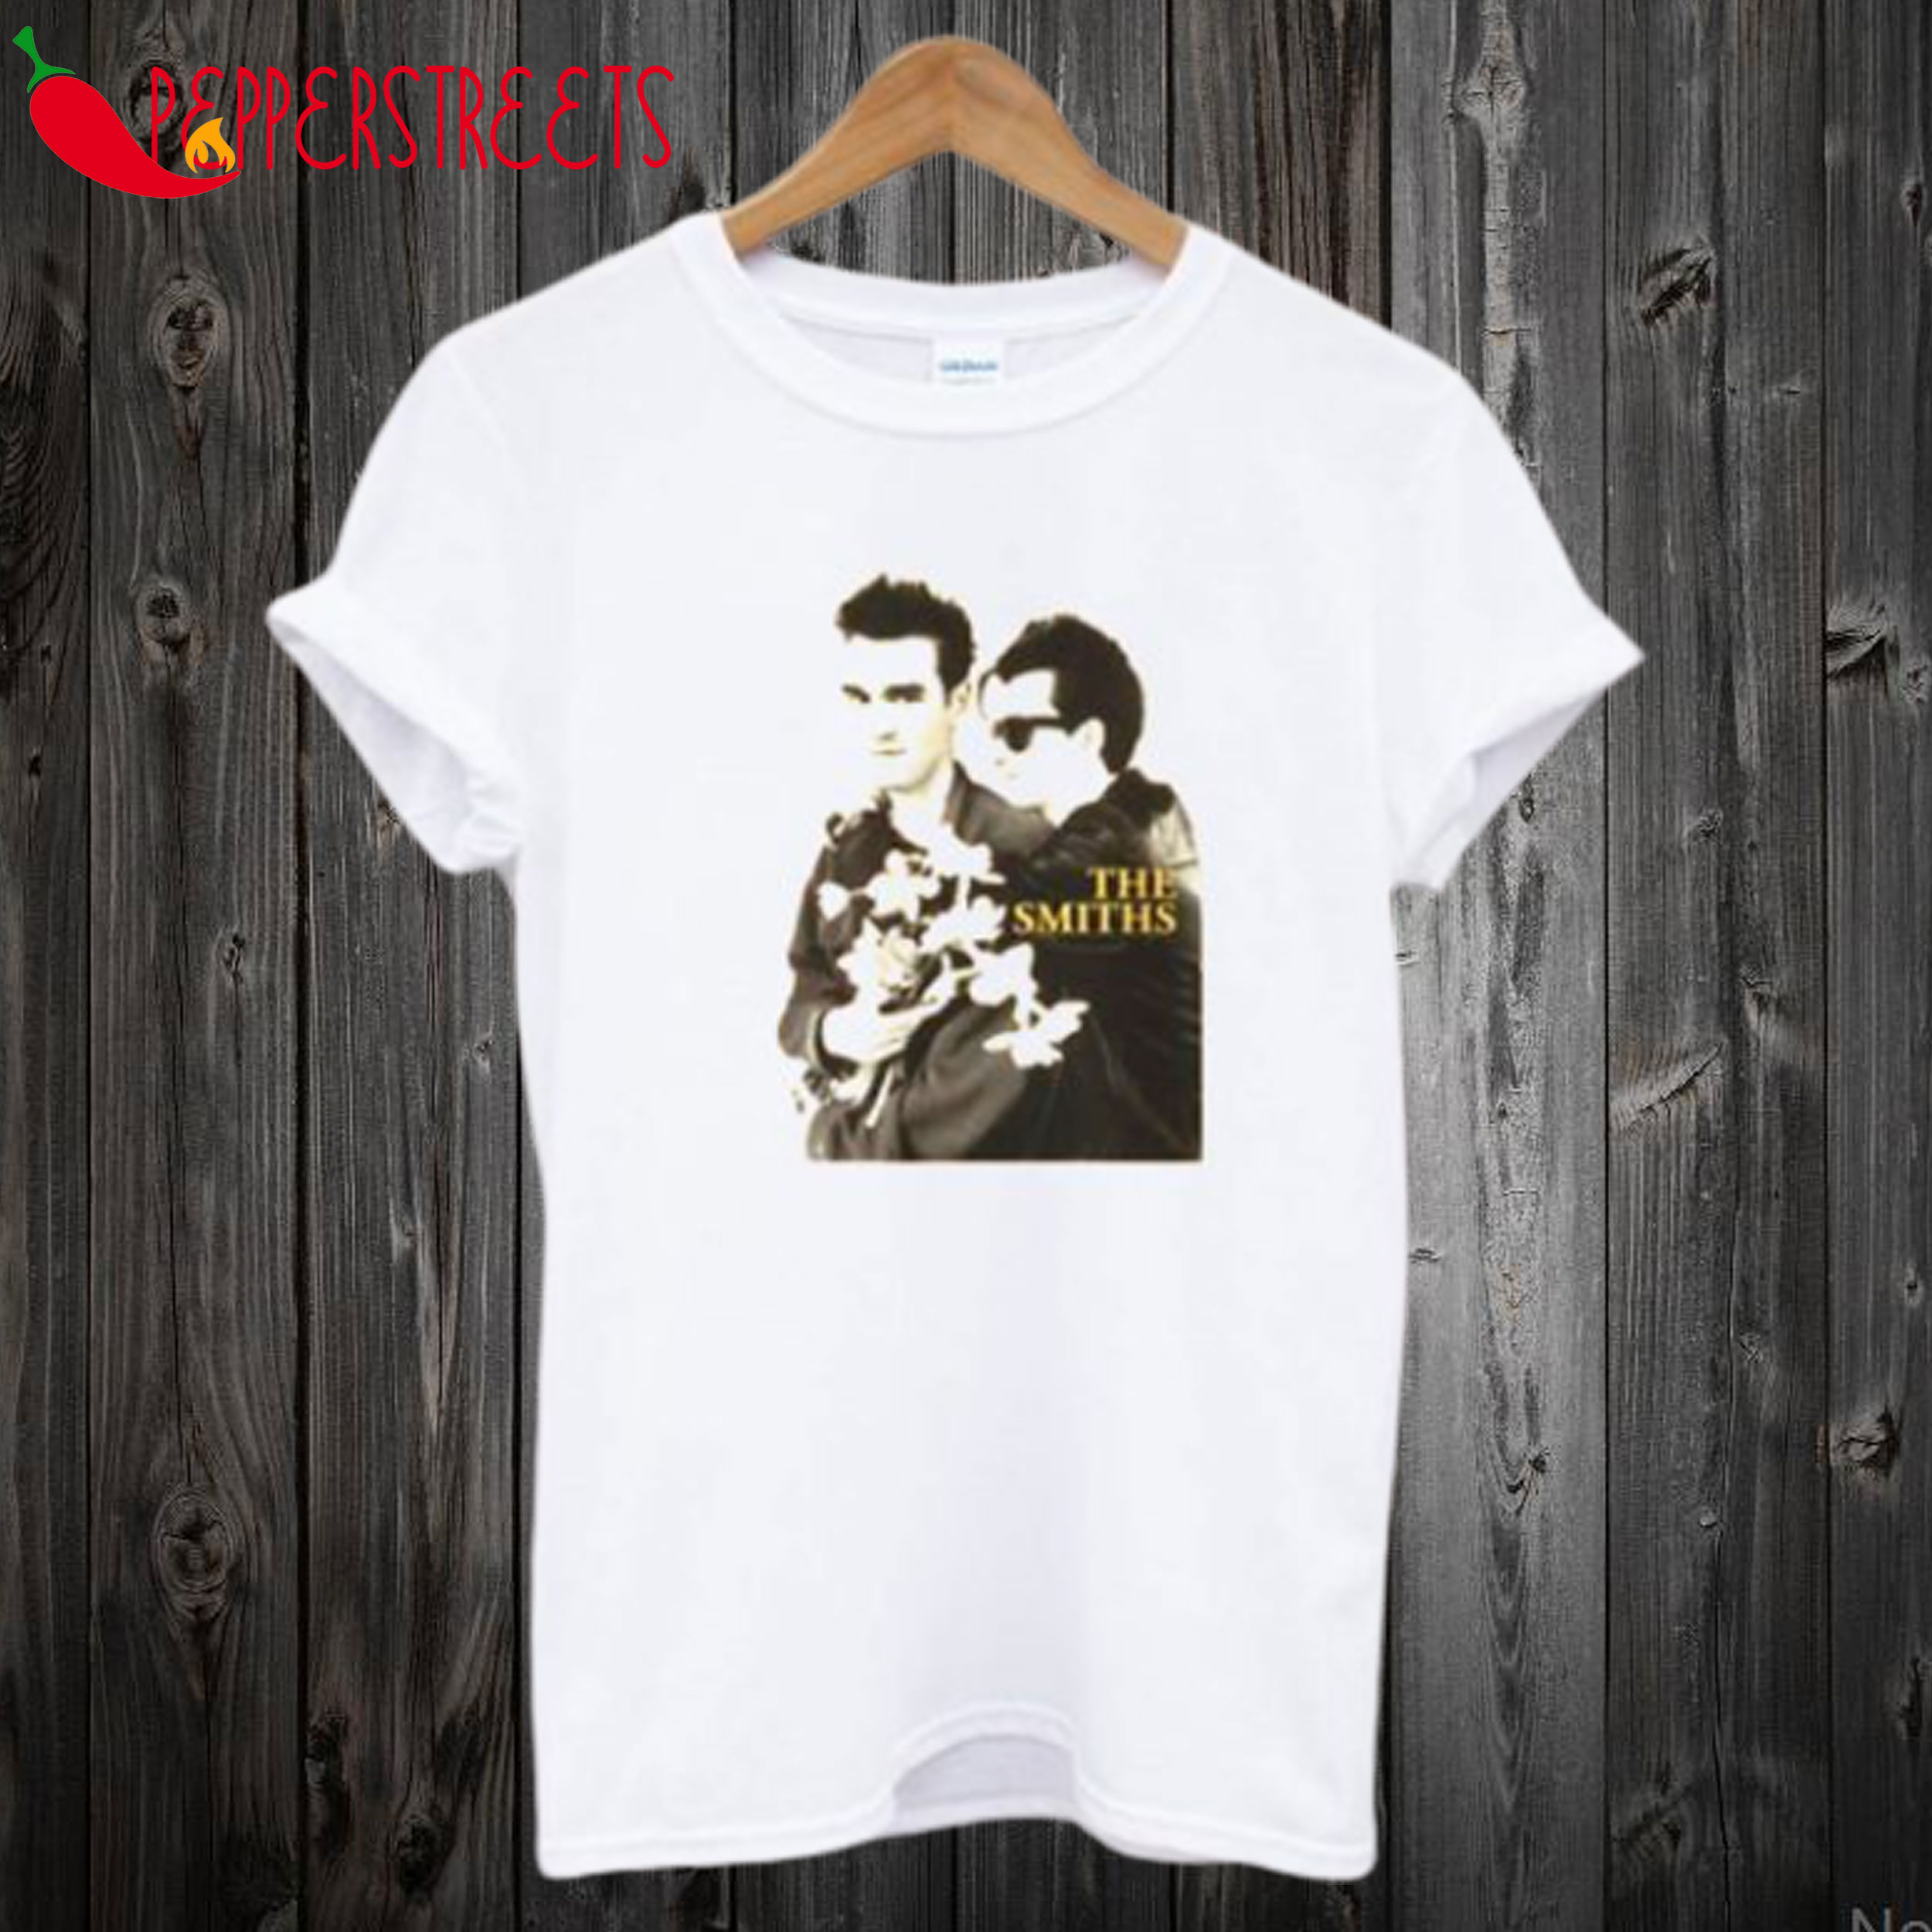 The Smiths Tee shirt